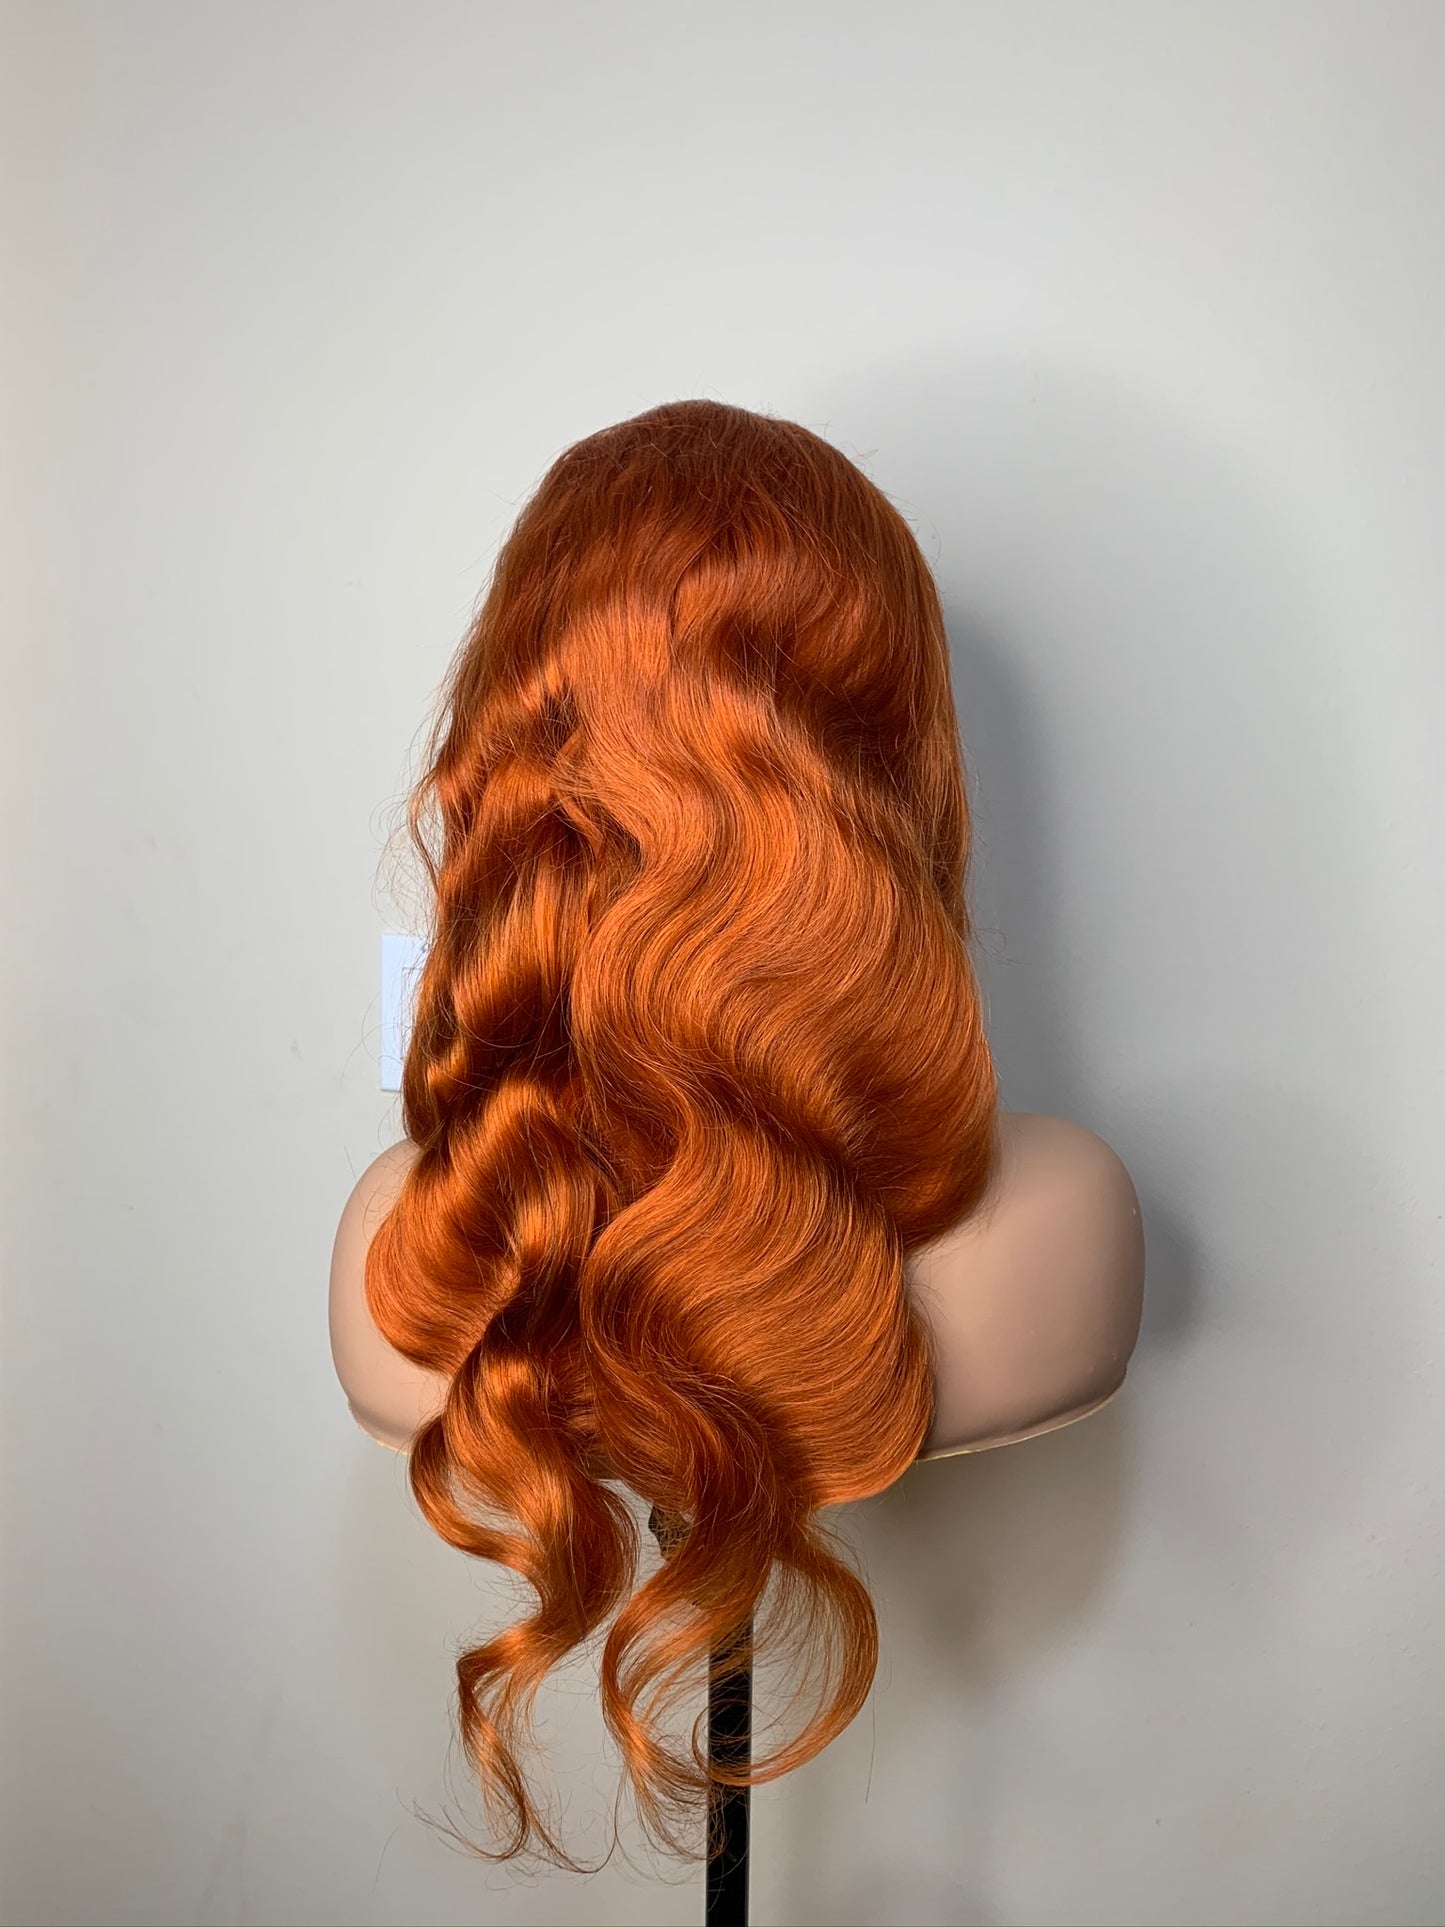 Orange lace frontal wig 150% density